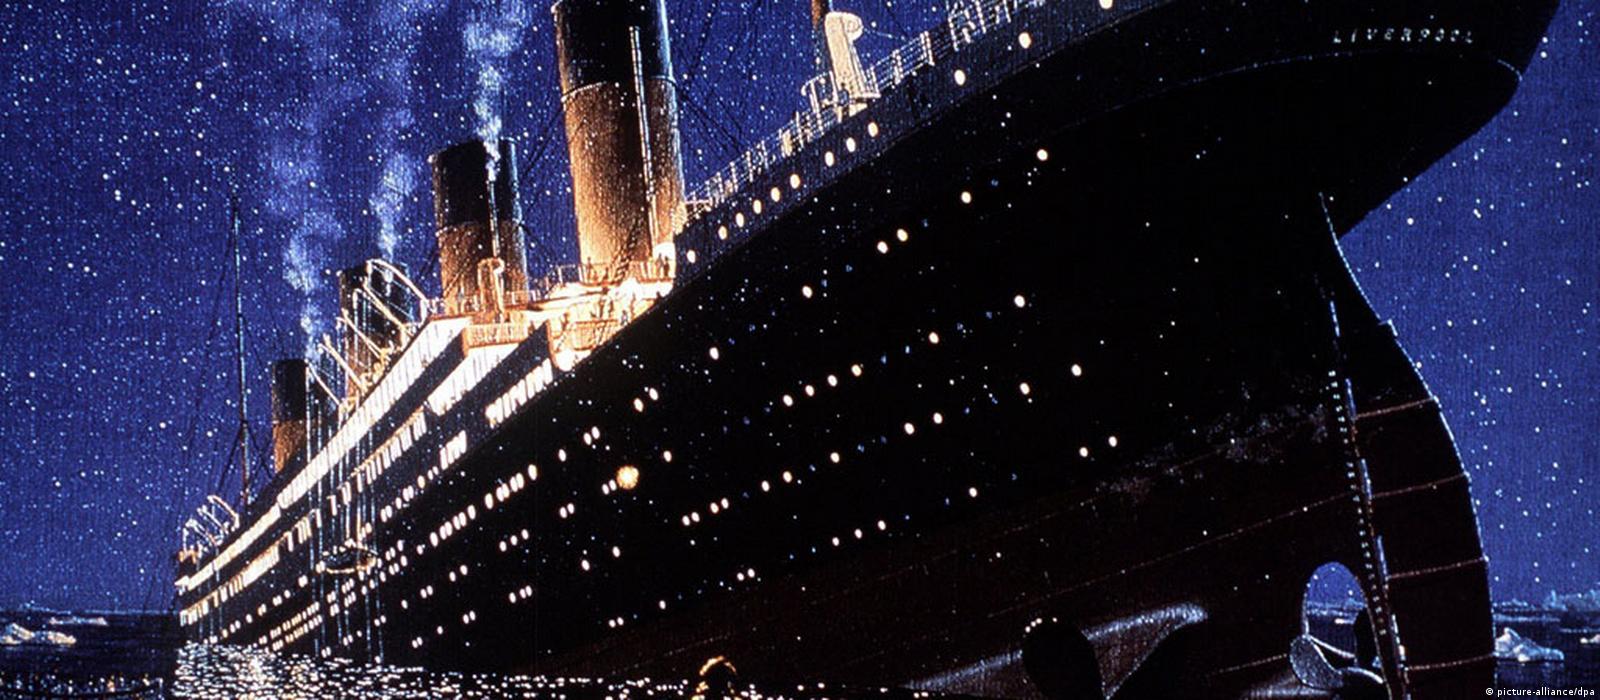 Submarine trip to the Titanic booking soon – DW – 01/09/2019